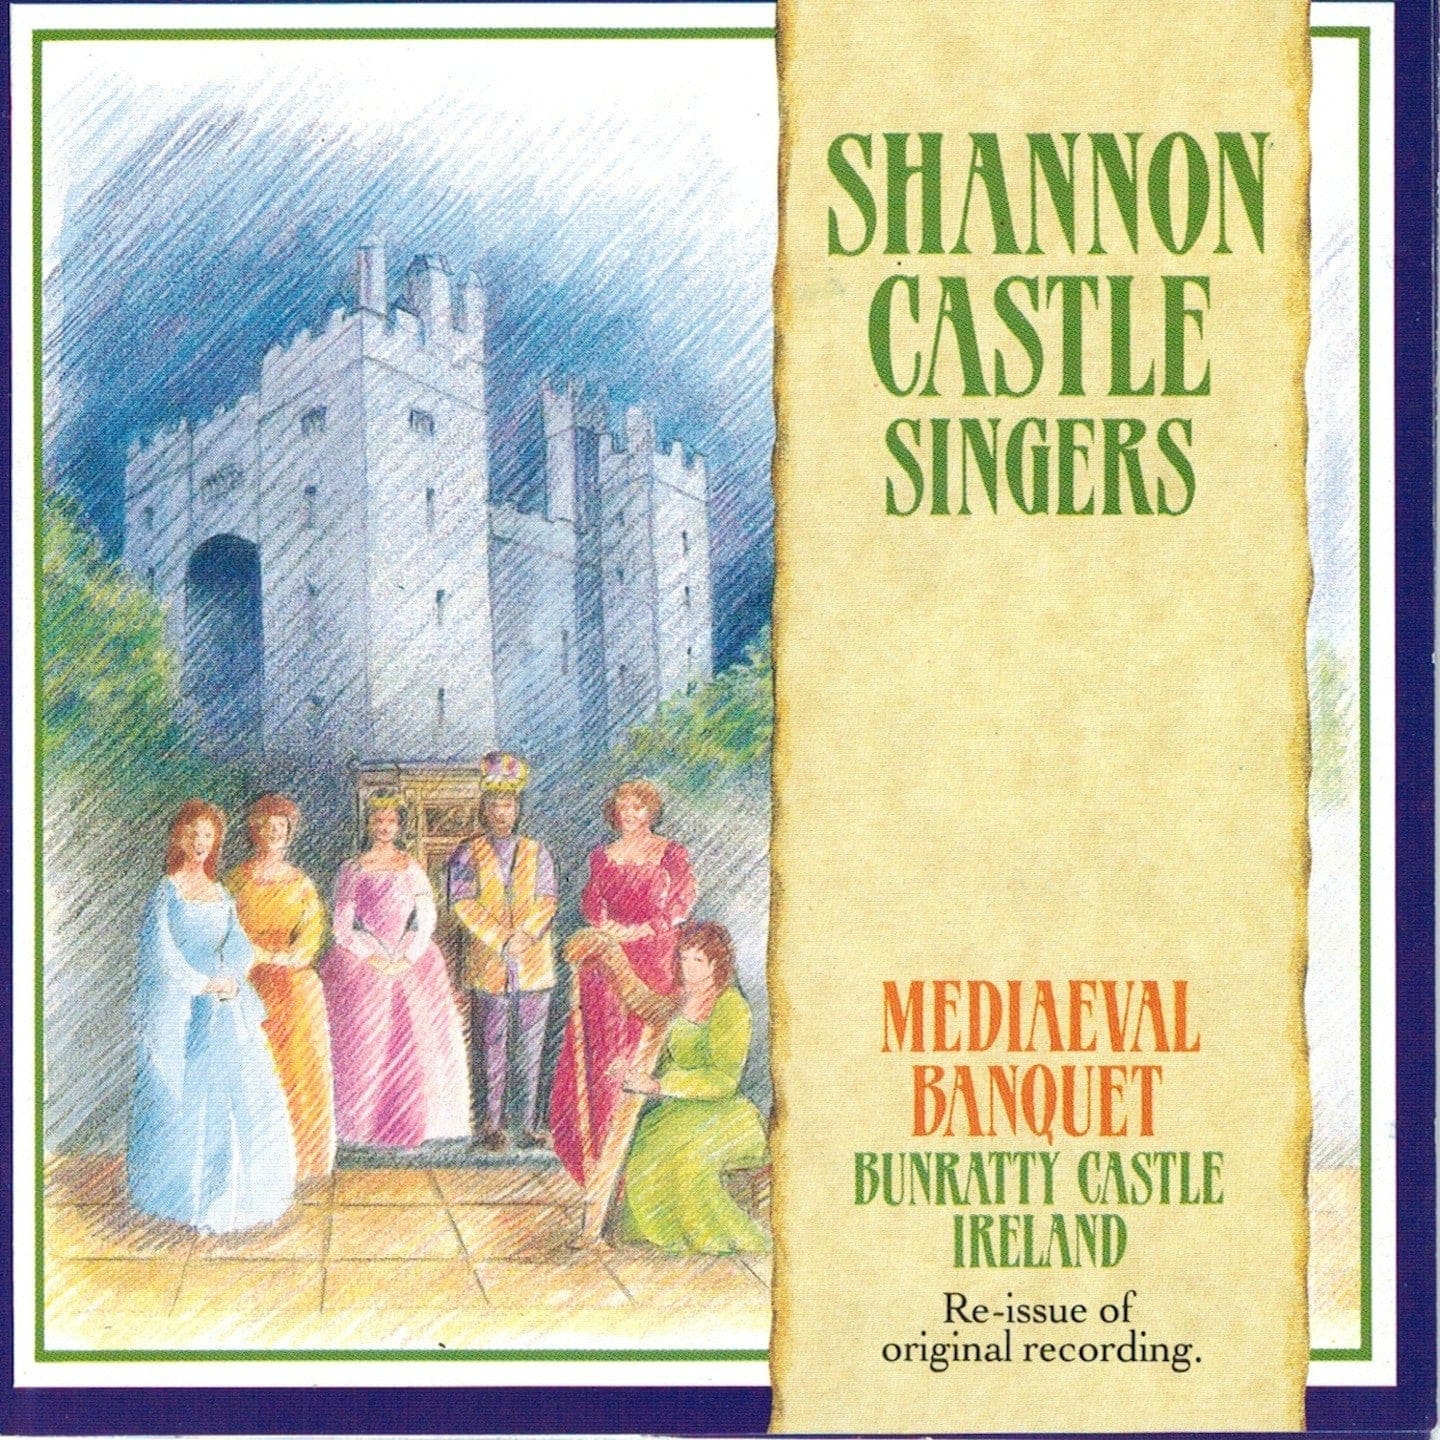 Mediaeval Banquet (Bunratty Castle Ireland) - Shannon Castle Singers [CD]